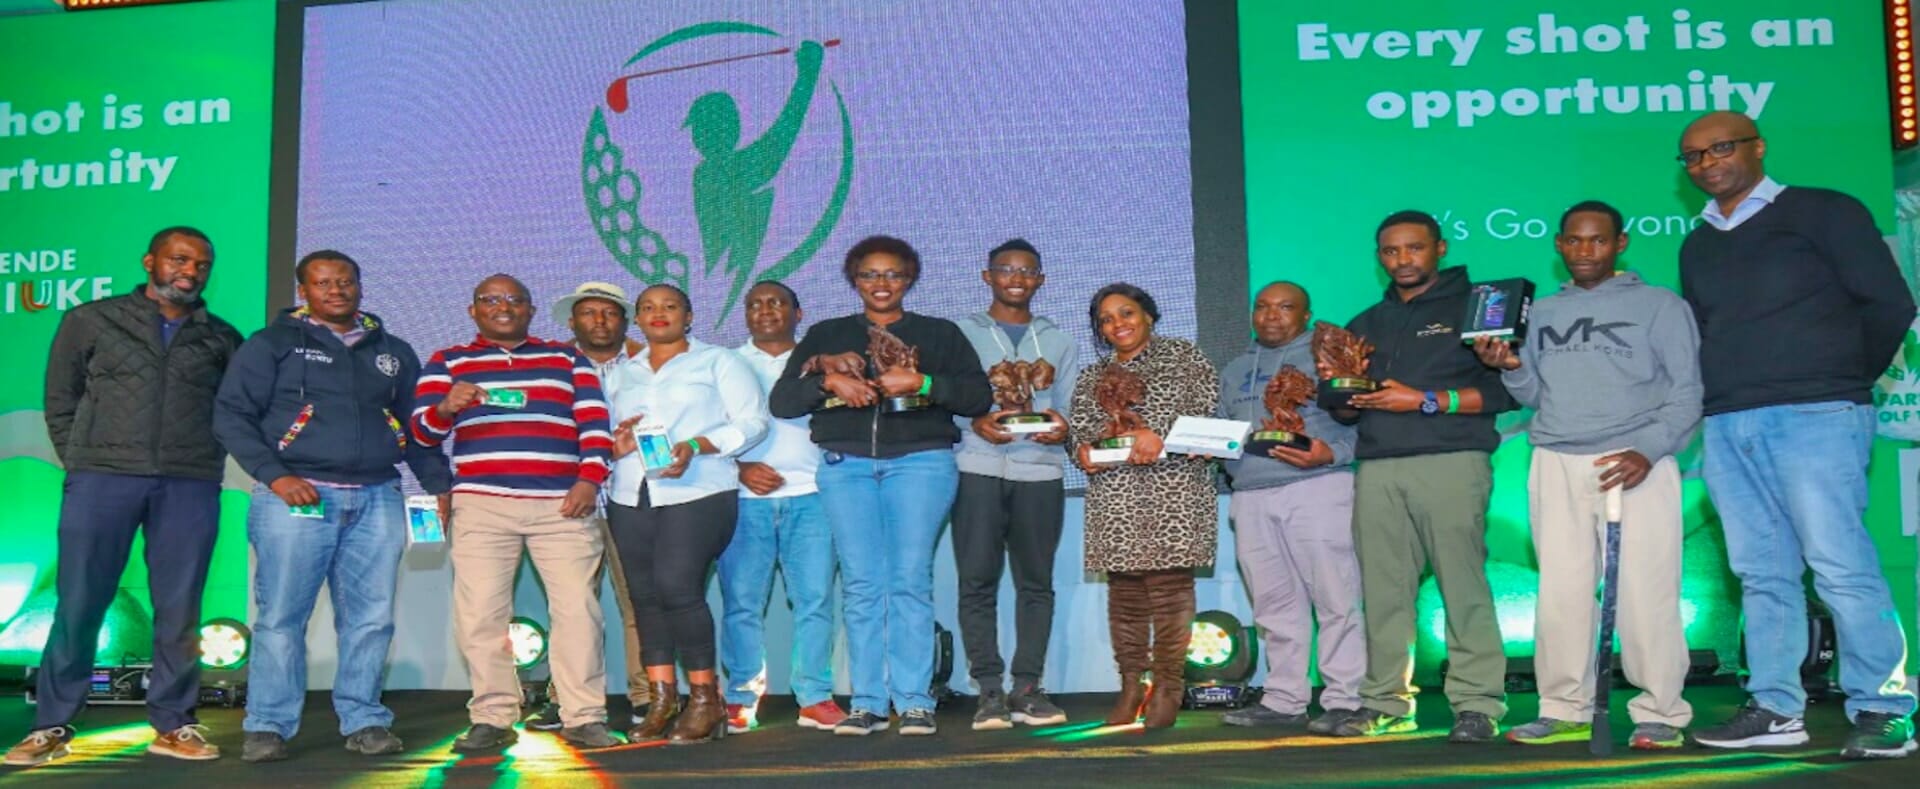 Limuru Based Junior Golfer Gitonga wins the second leg of Safaricom Golf Tour